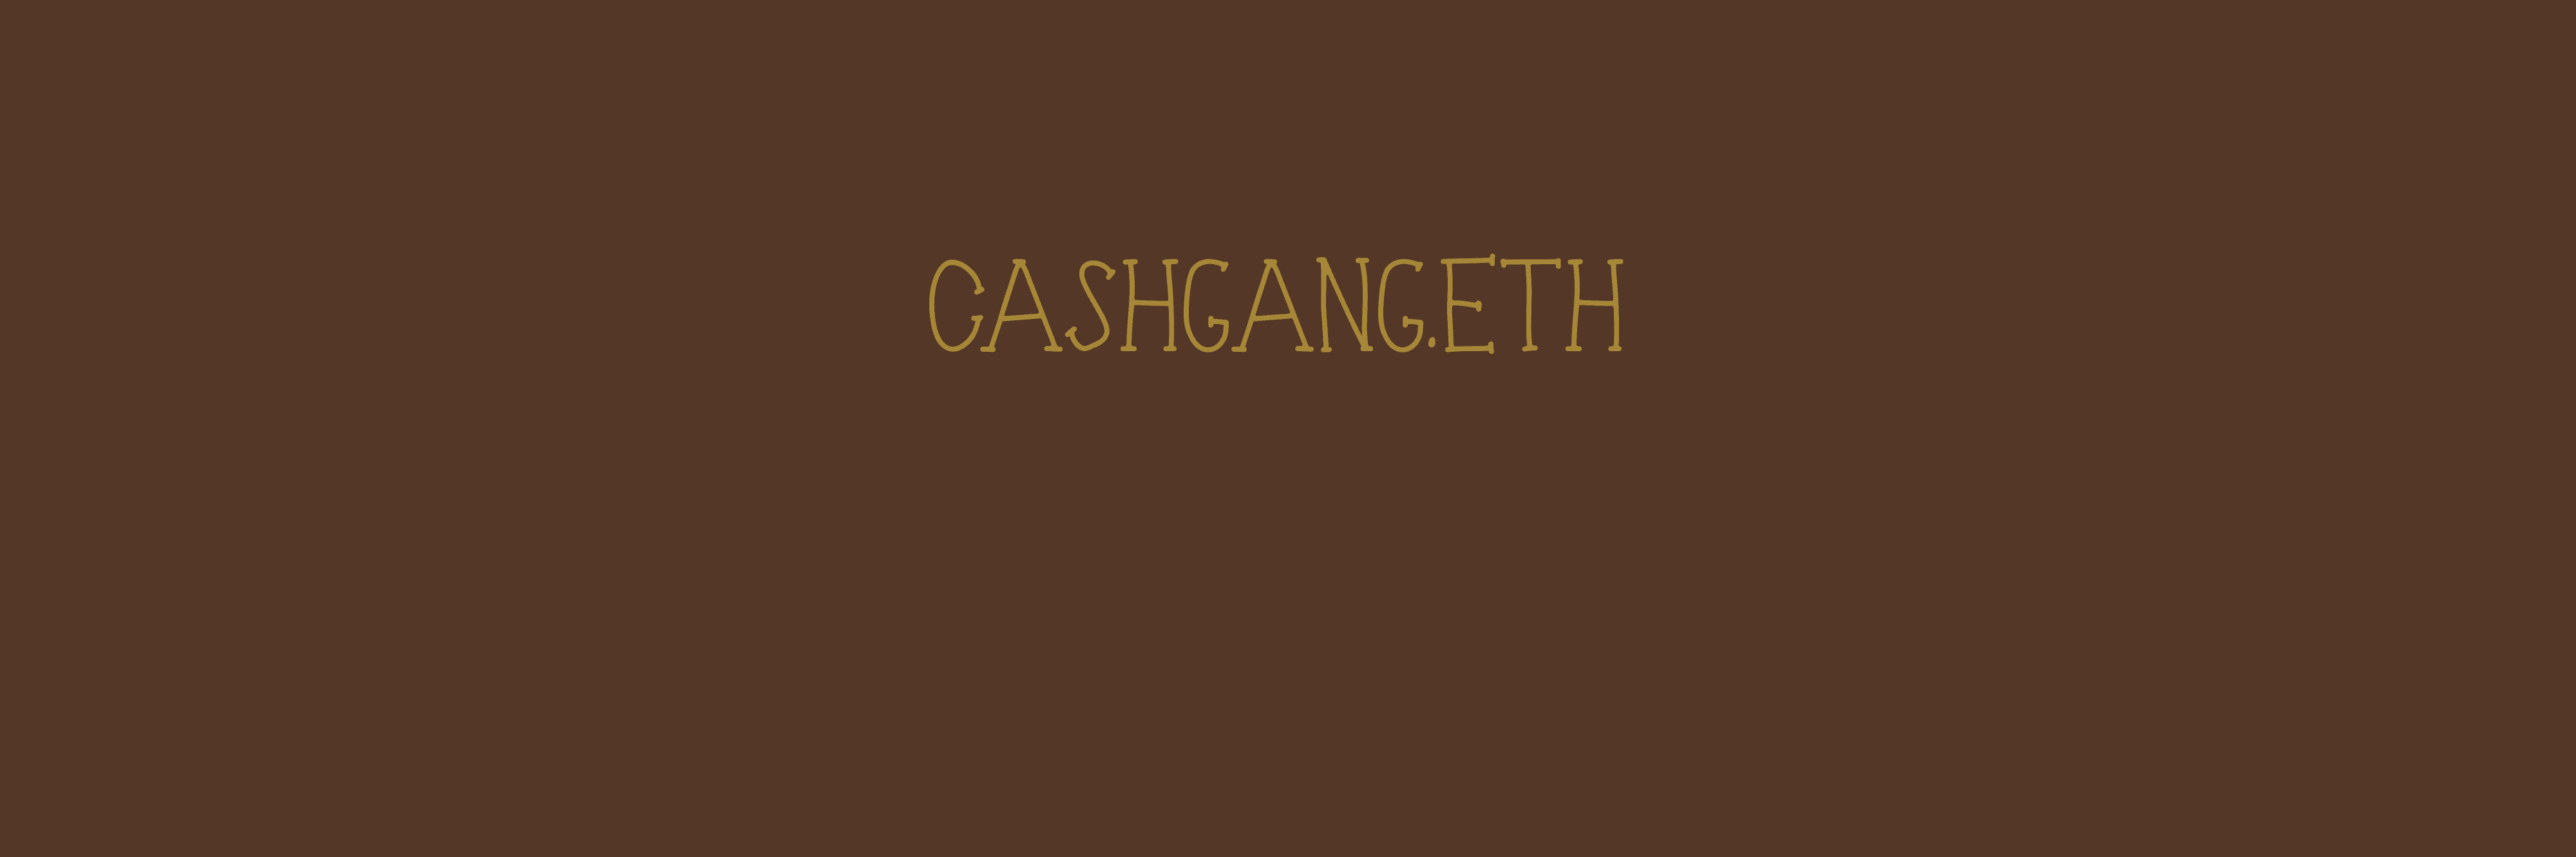 cashgang-eth 橫幅